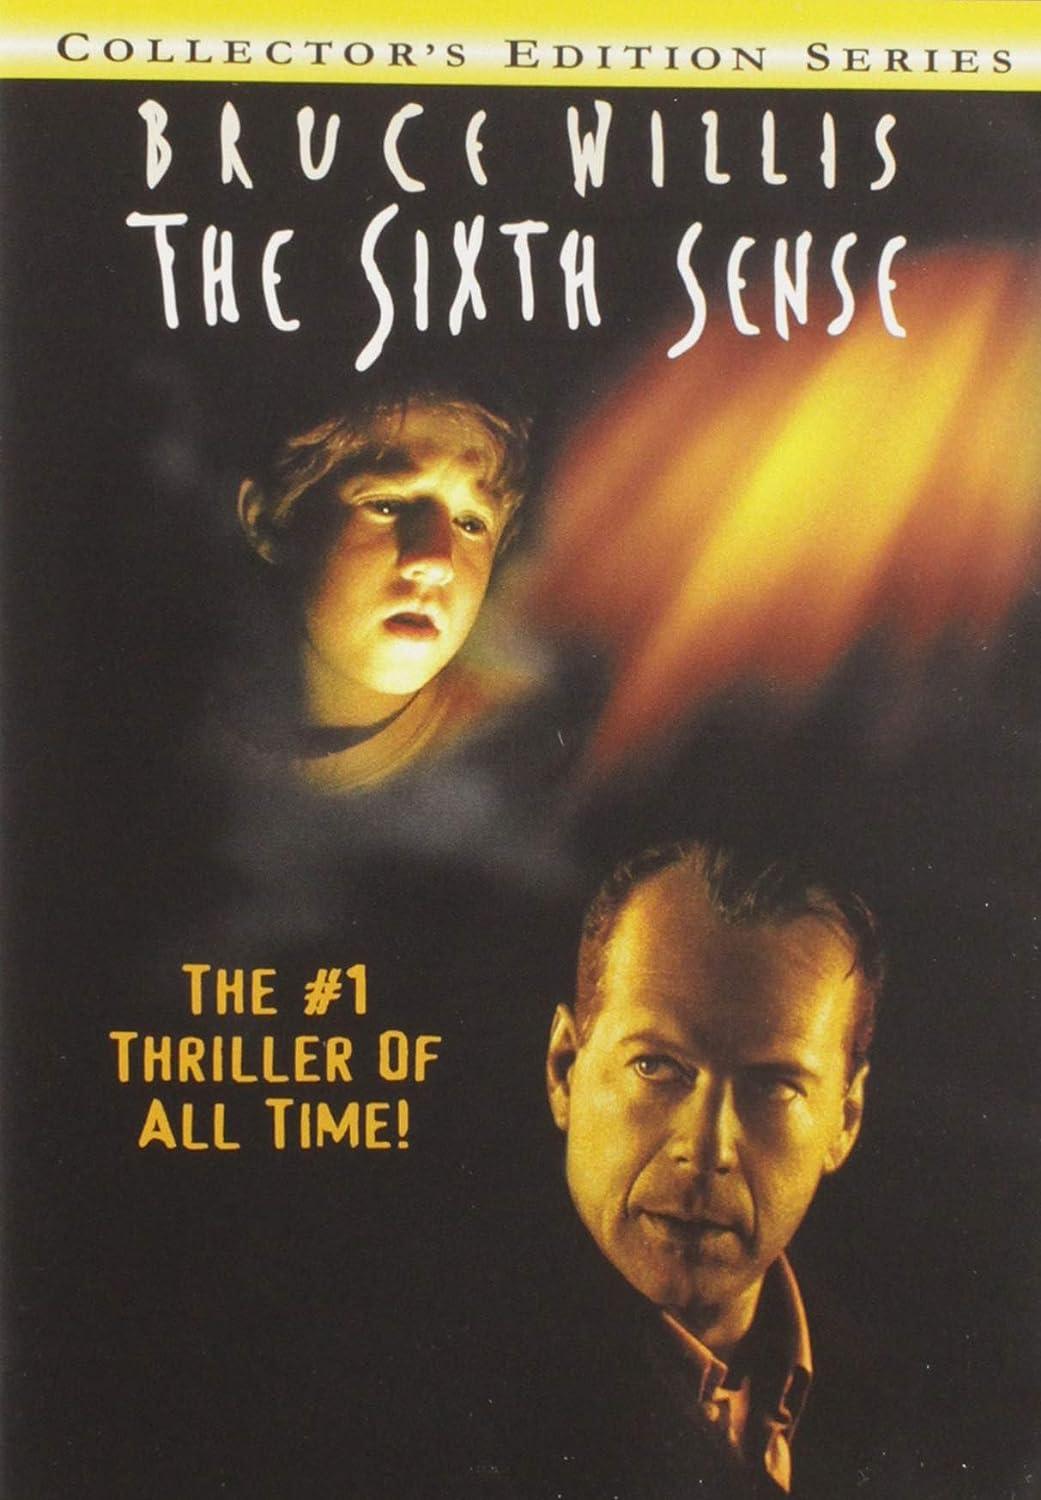 The Sixth Sense - Darkside Records